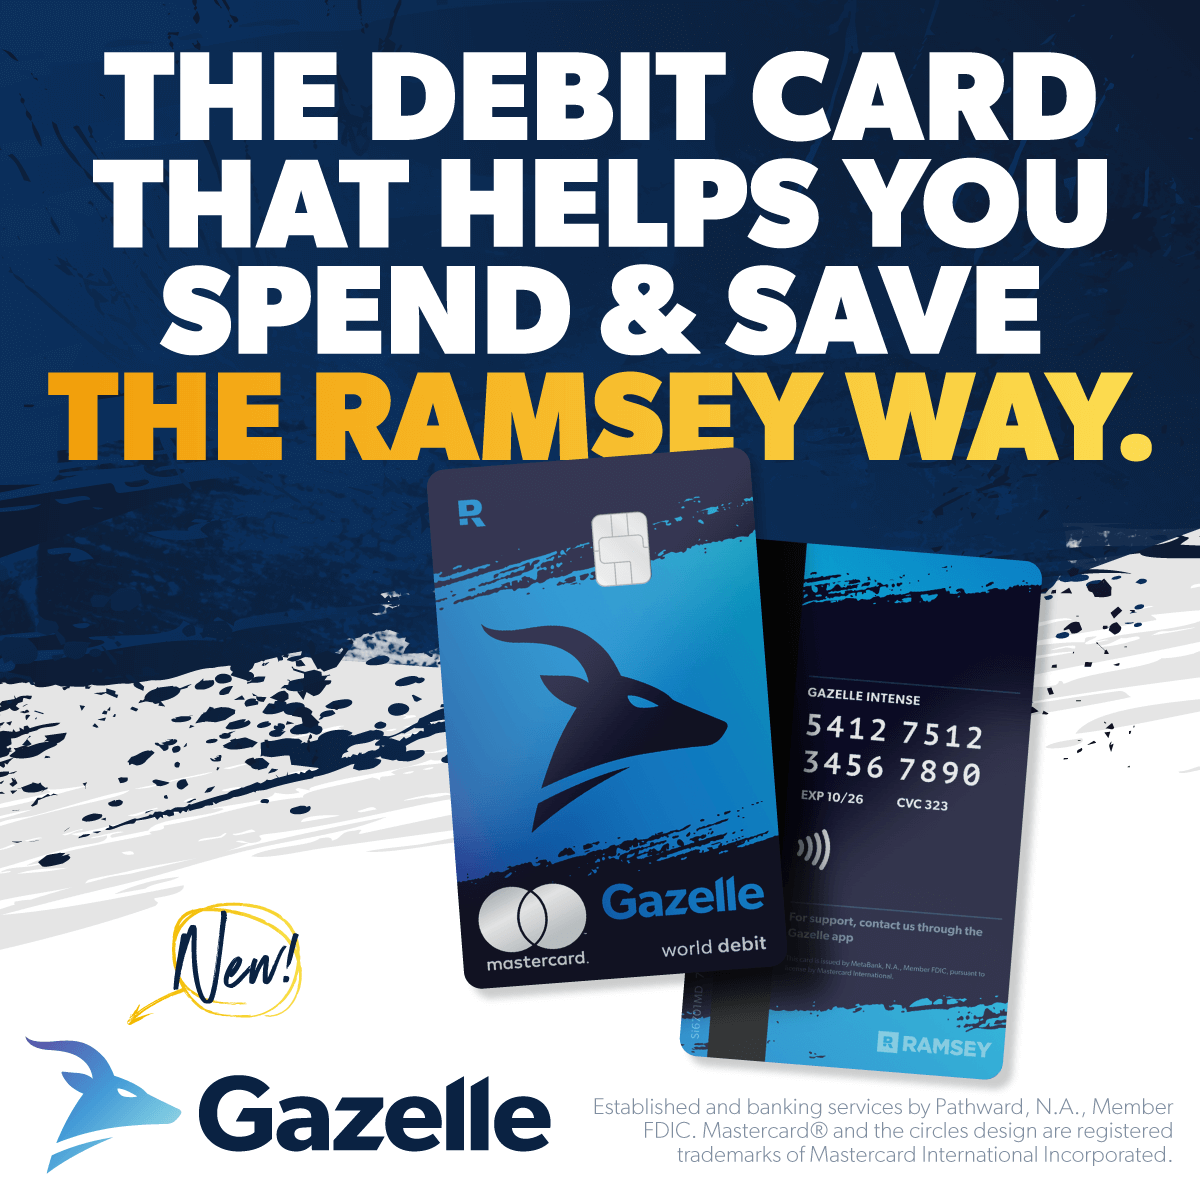 Introducing the Gazelle Debit Card